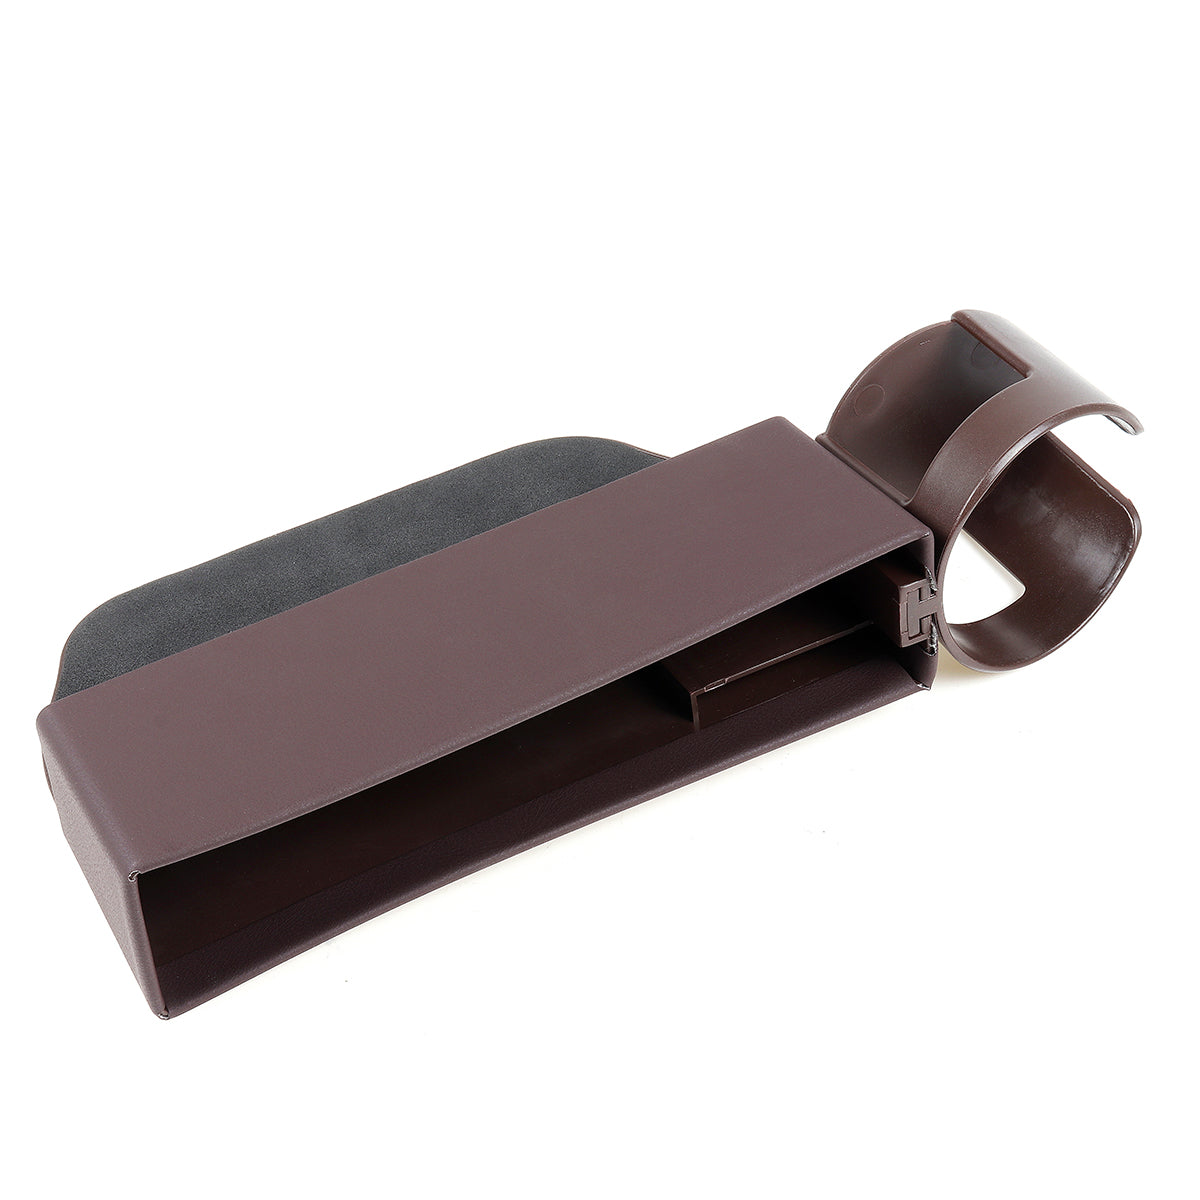 Car Storage Box Organizer Pocket Seat Side Slit For Wallet Phone Coins C igarette Keys Cards - Auto GoShop